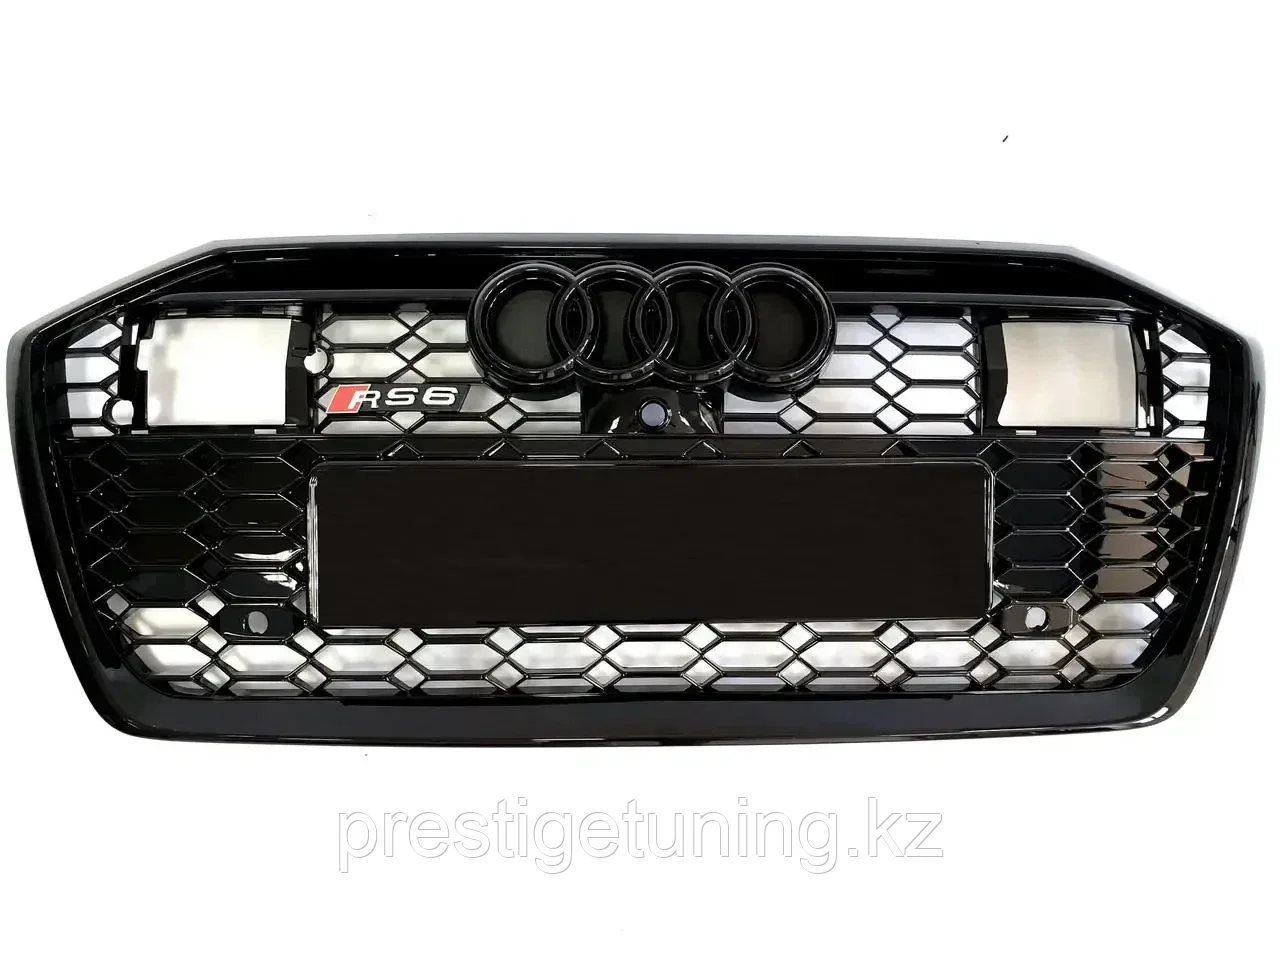 Решетка радиатора на Audi A6 V (C8) 2018-по н.в стиль RS6 (Черный цвет) под дистроник, фото 1